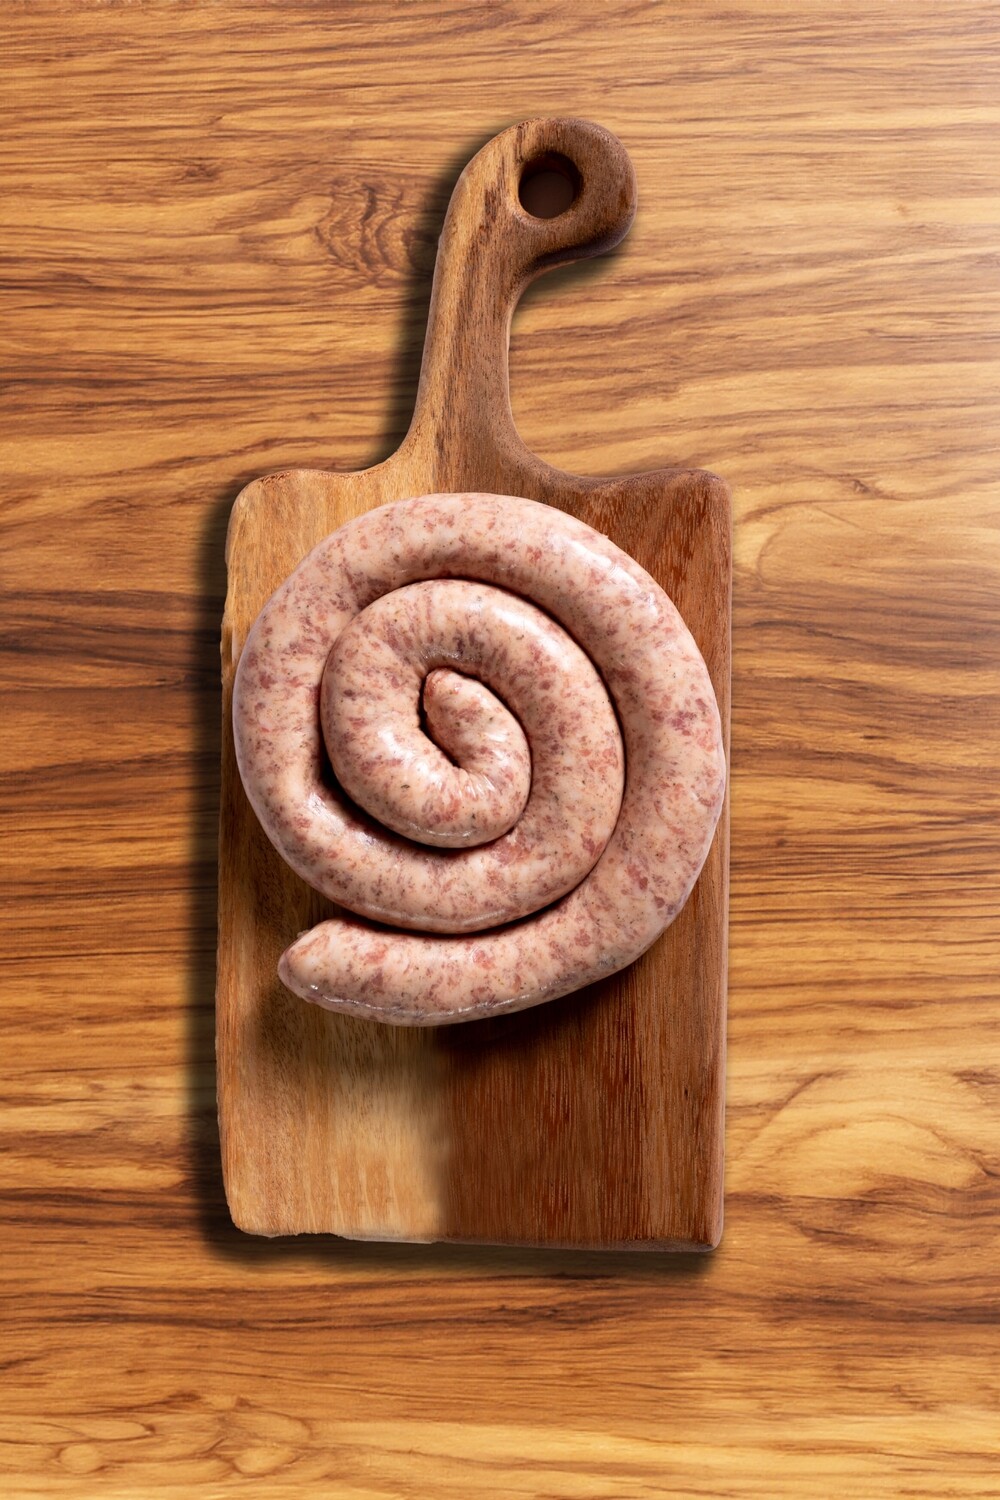 Fresh Link Sausage